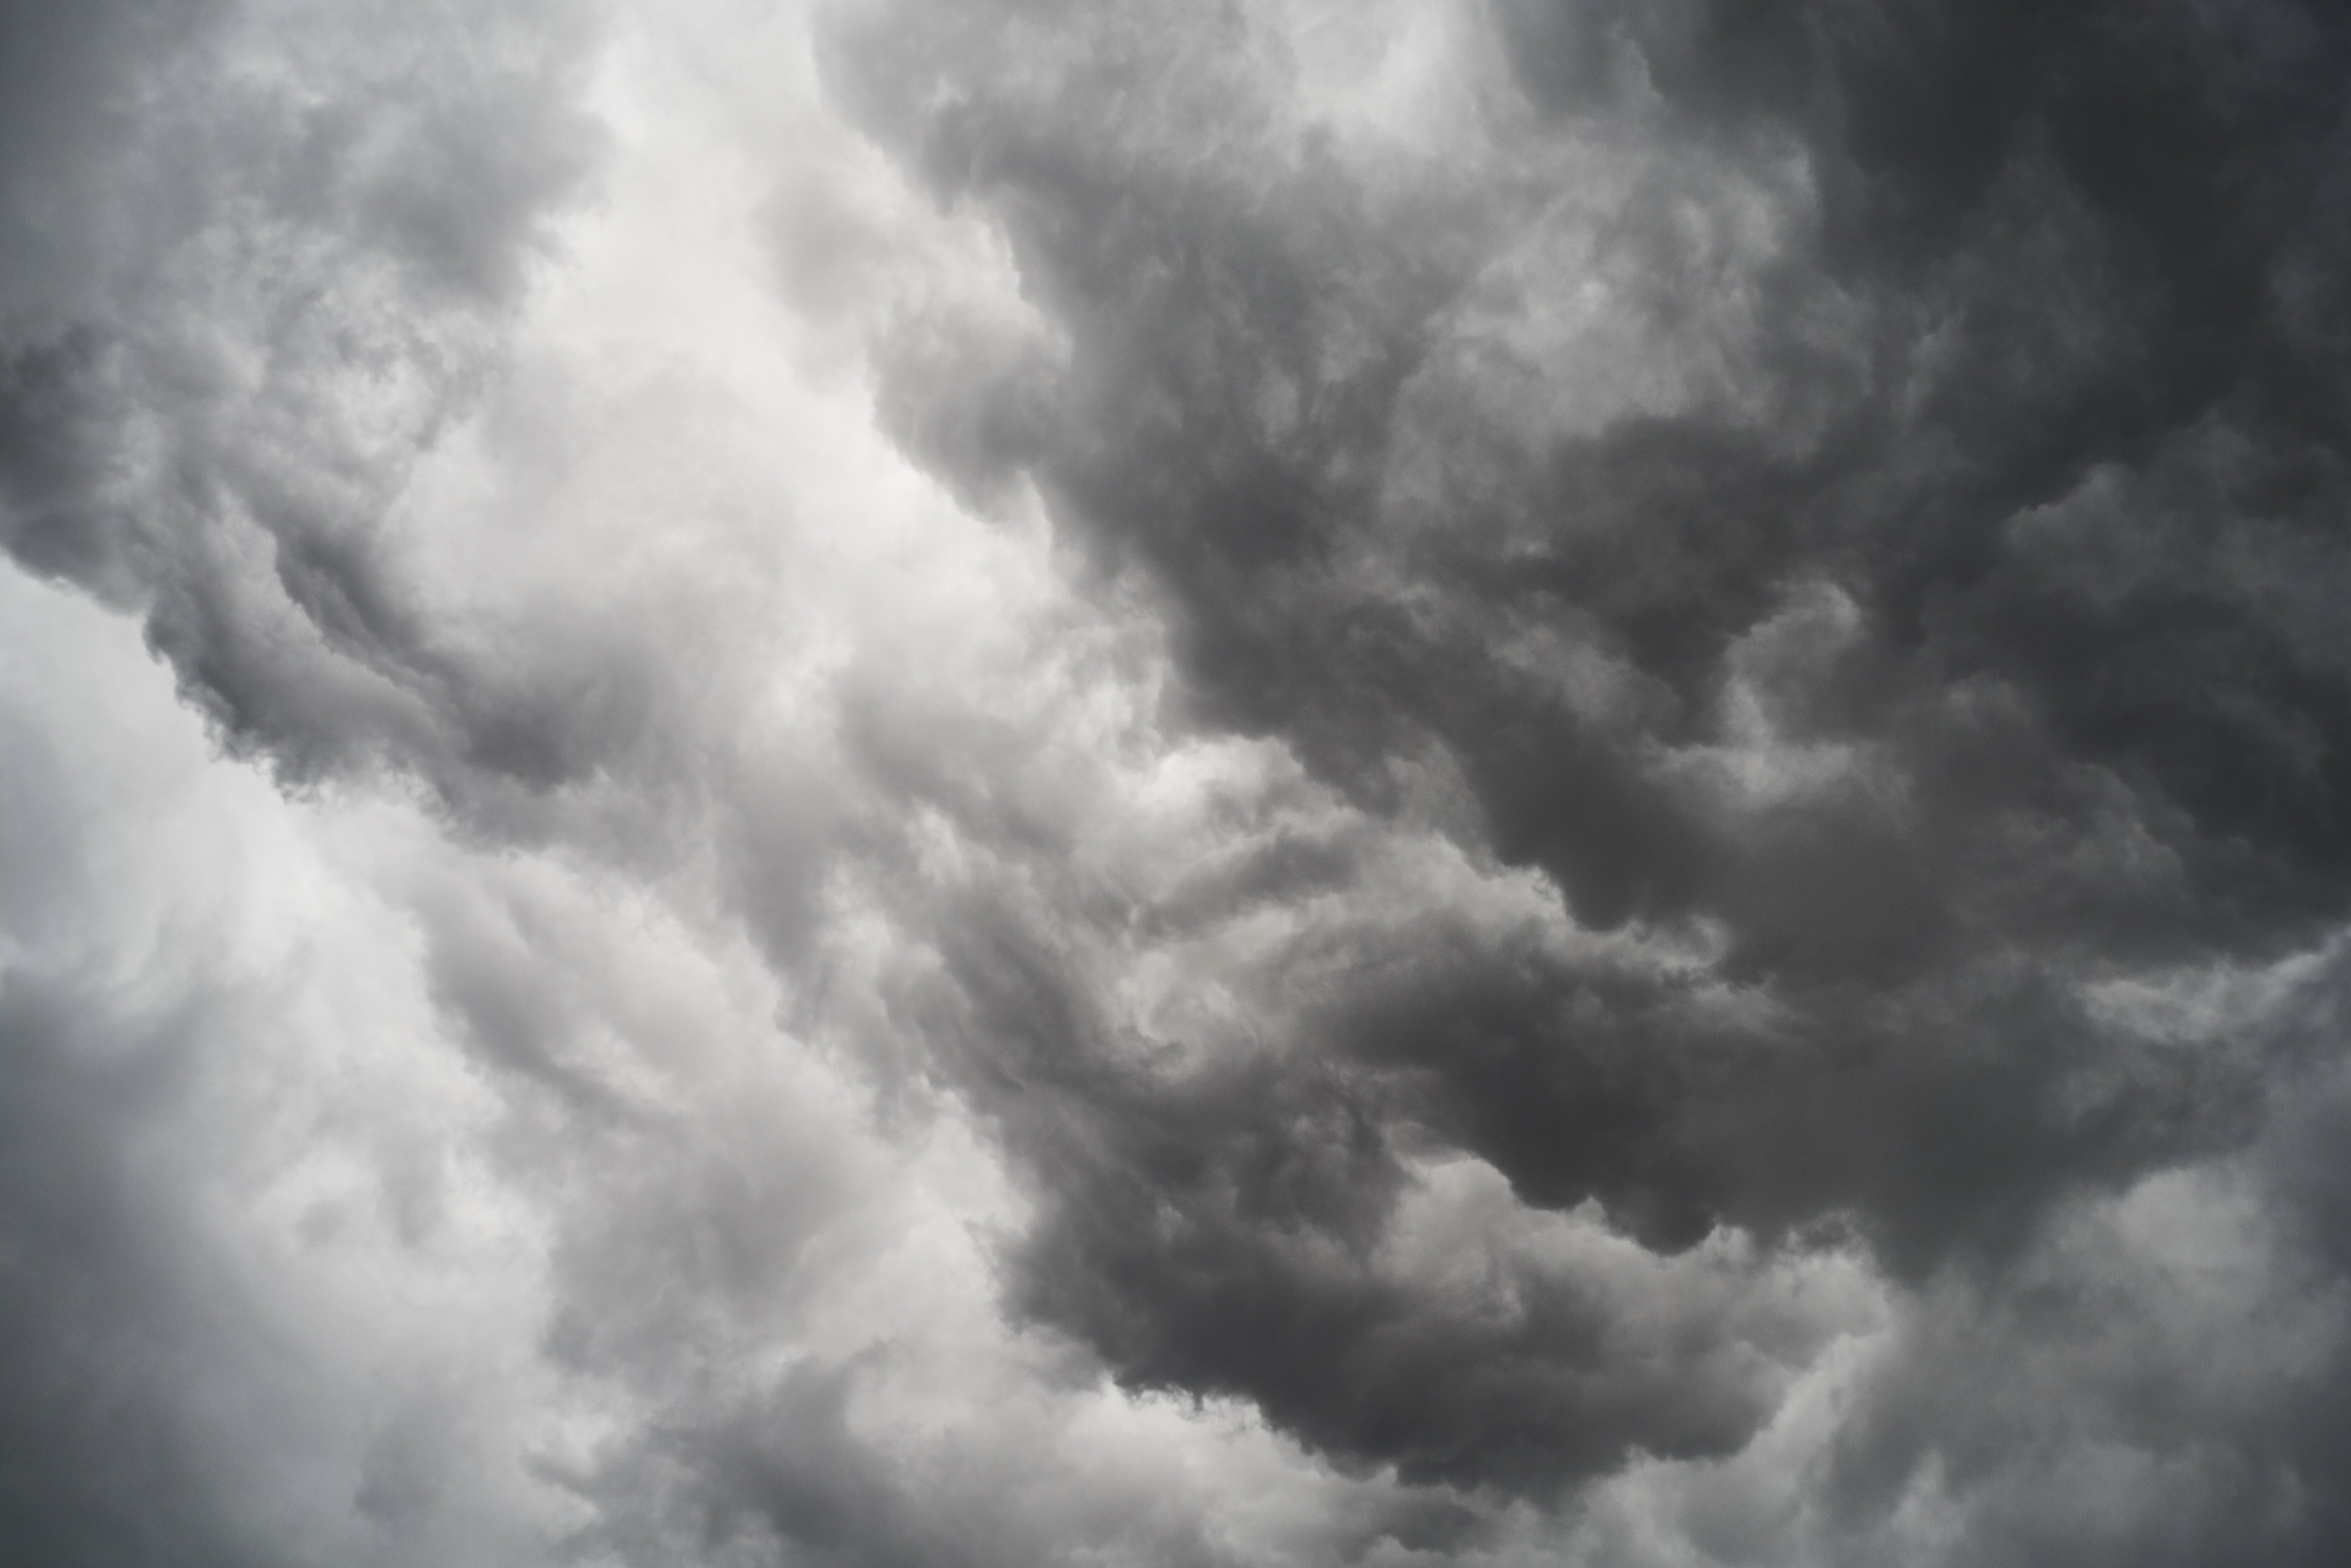 Free stock photos of cloudy sky · Pexels